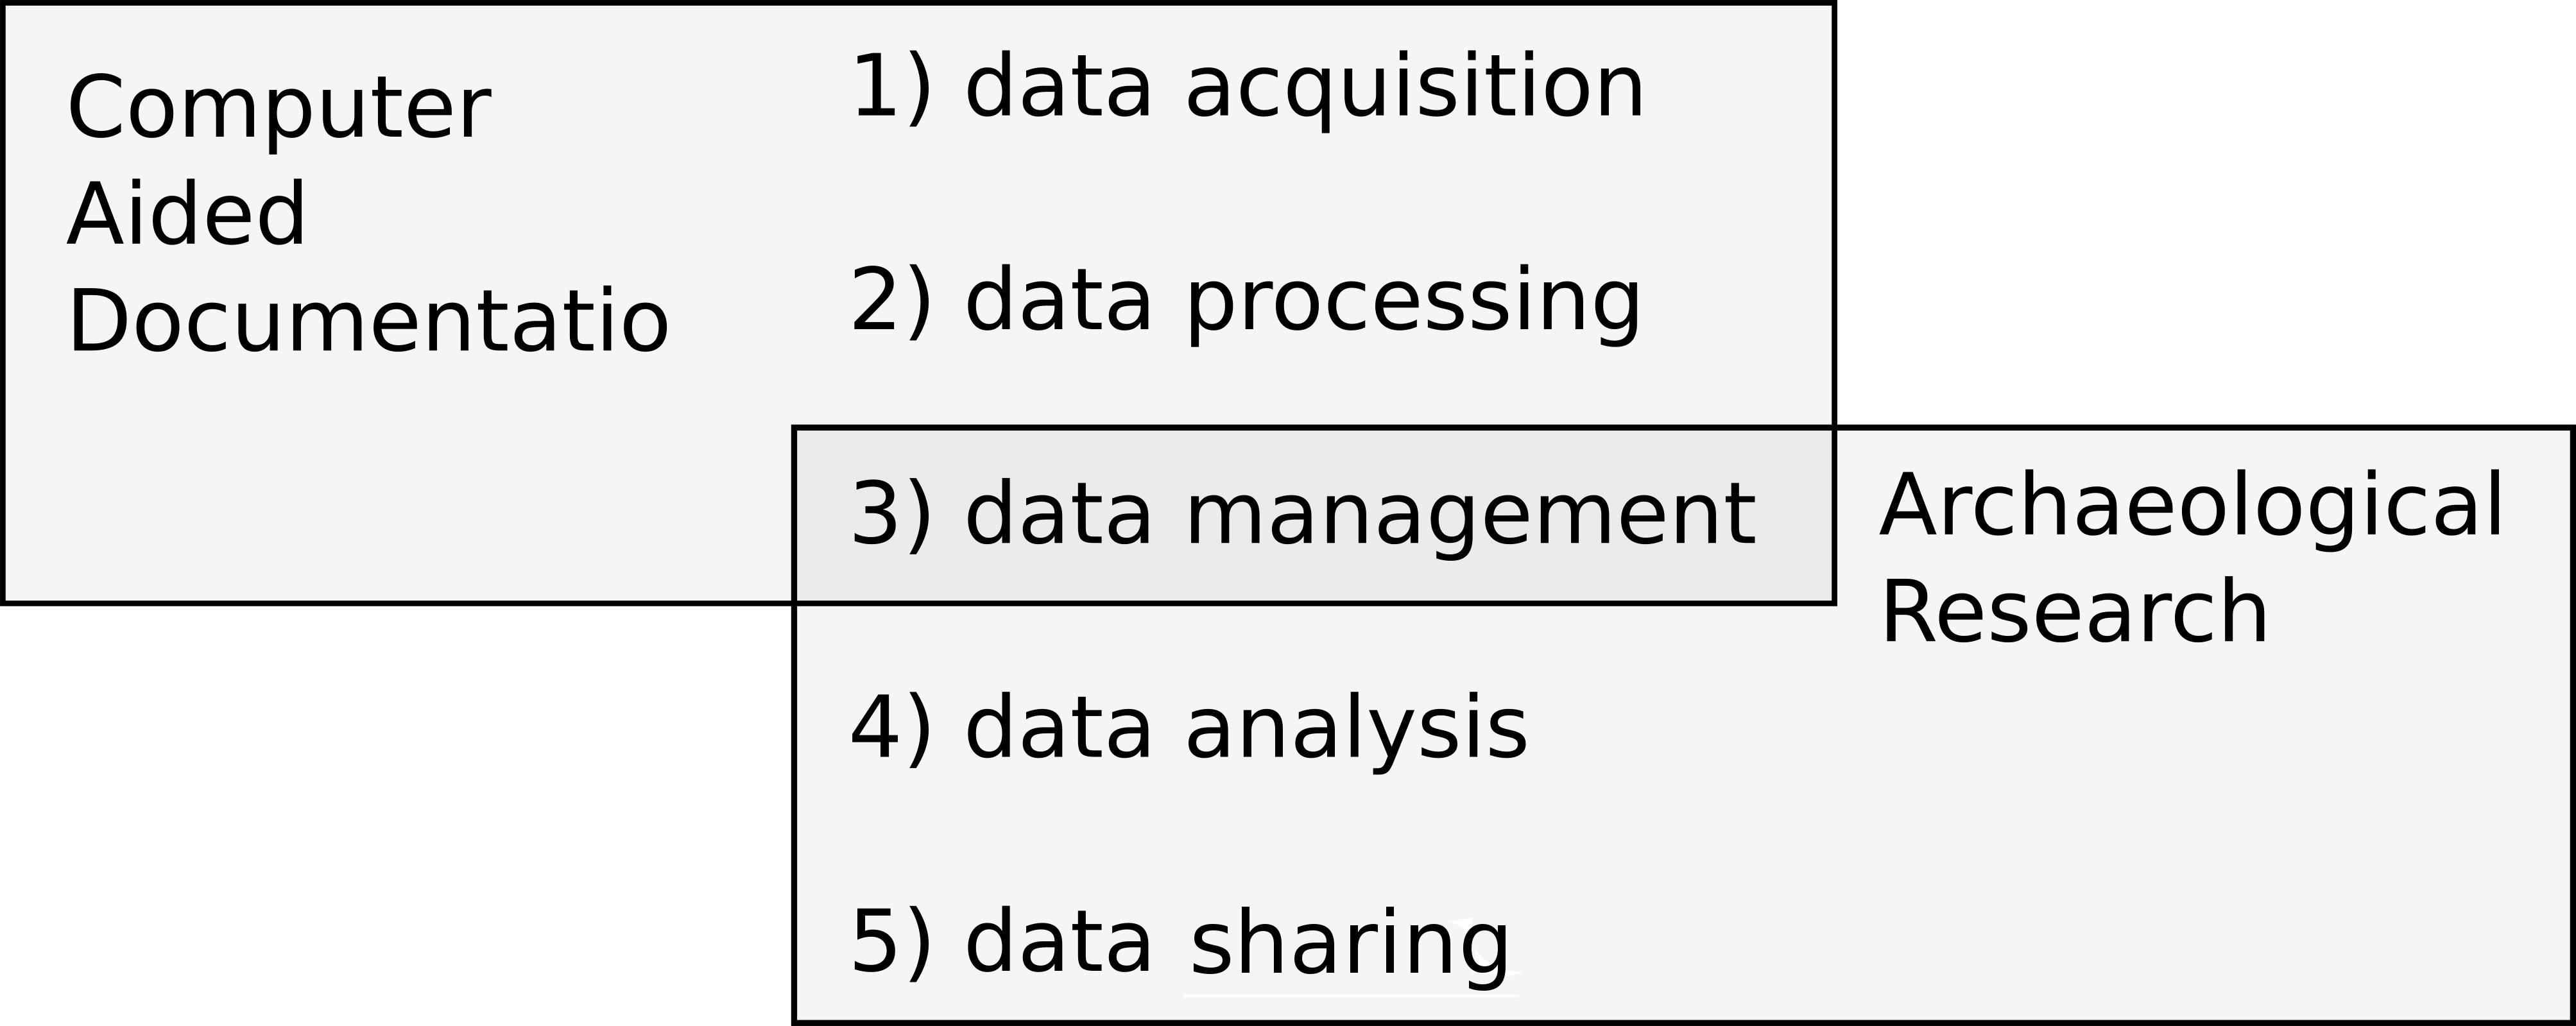 File:GloboNews logo.svg - Wikipedia